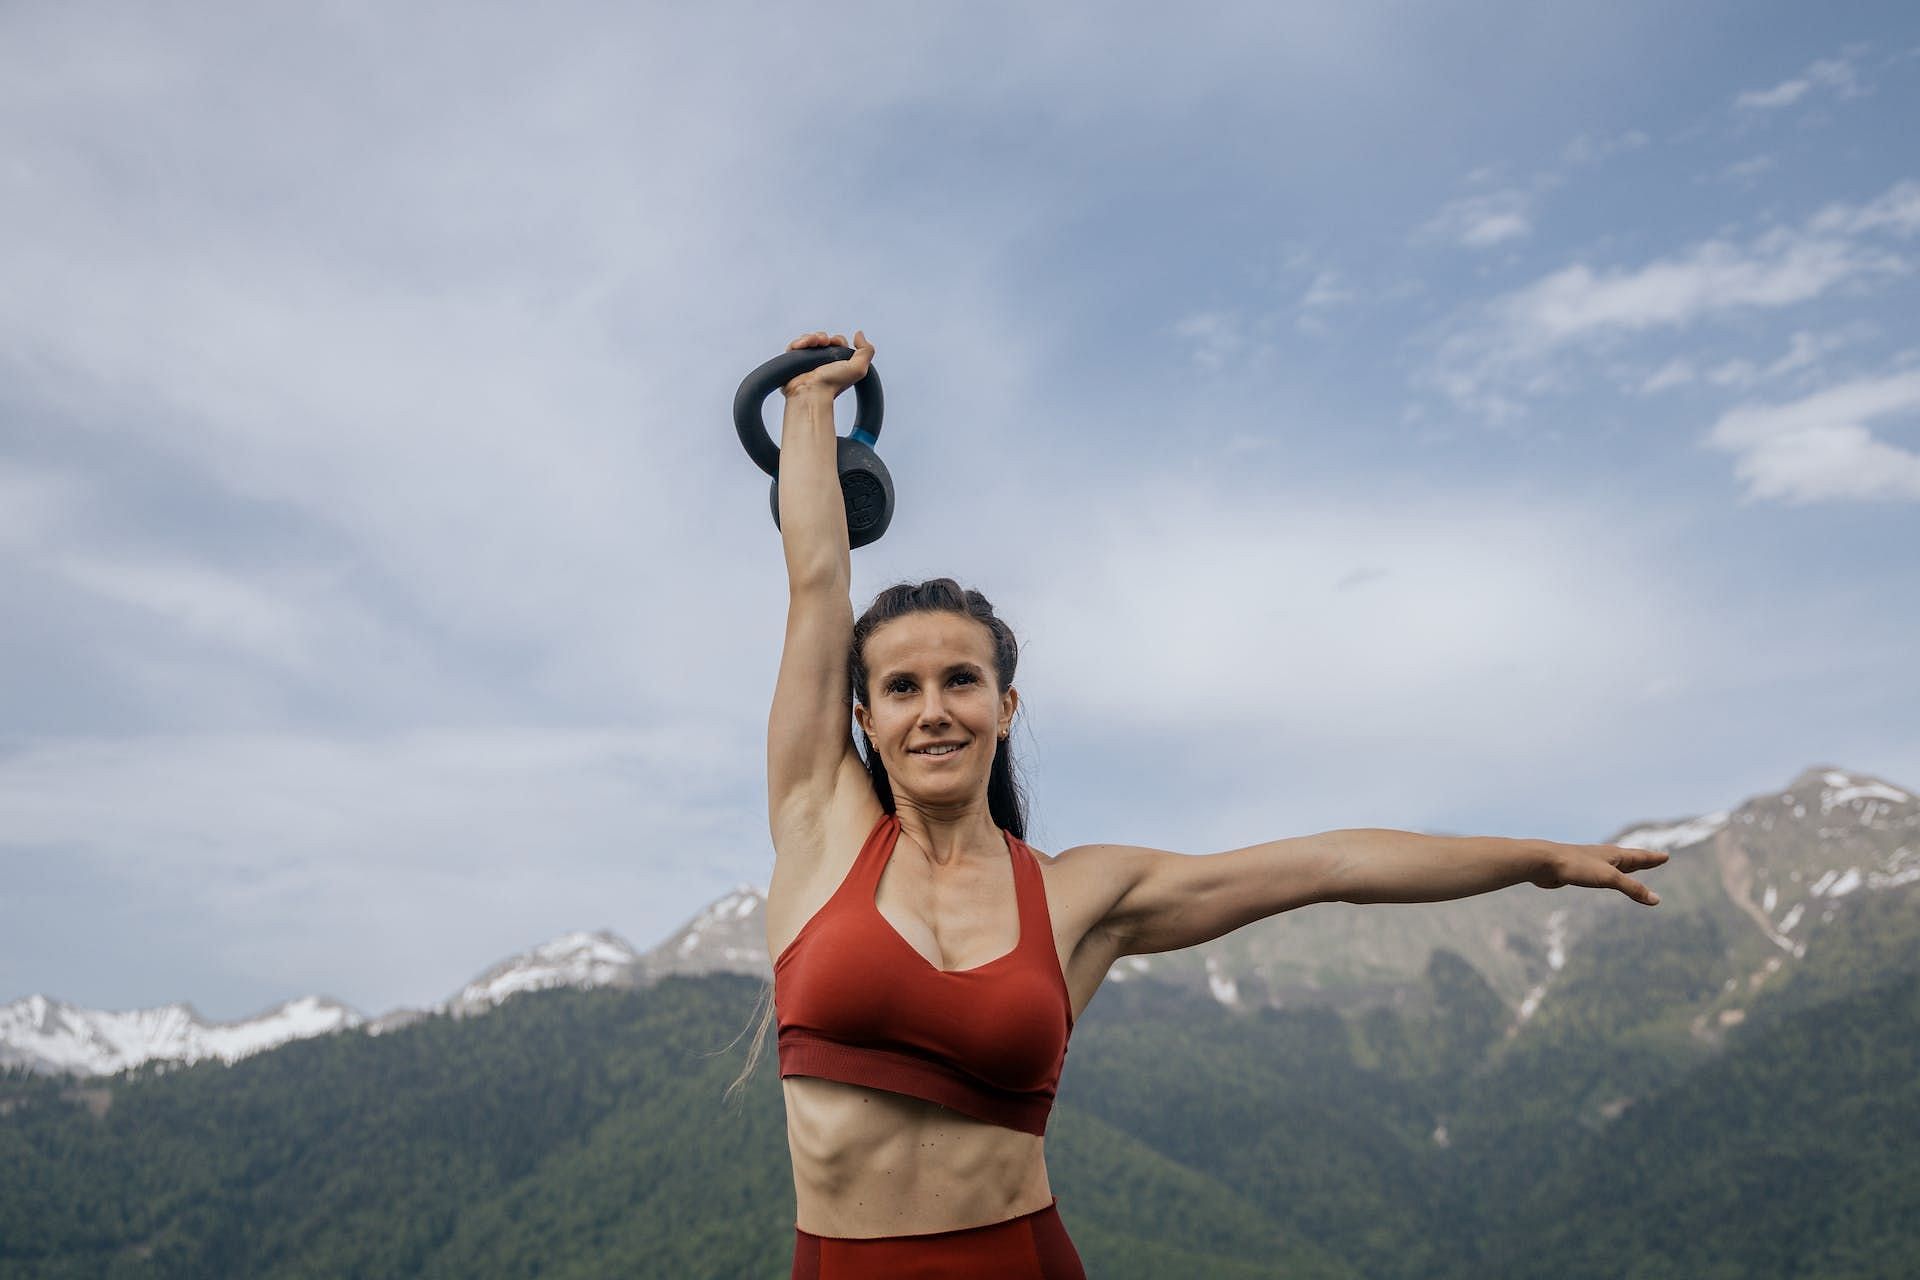 Lifting weights increases wrist strength (Image via Pexels/Anastasia Shuraeva)